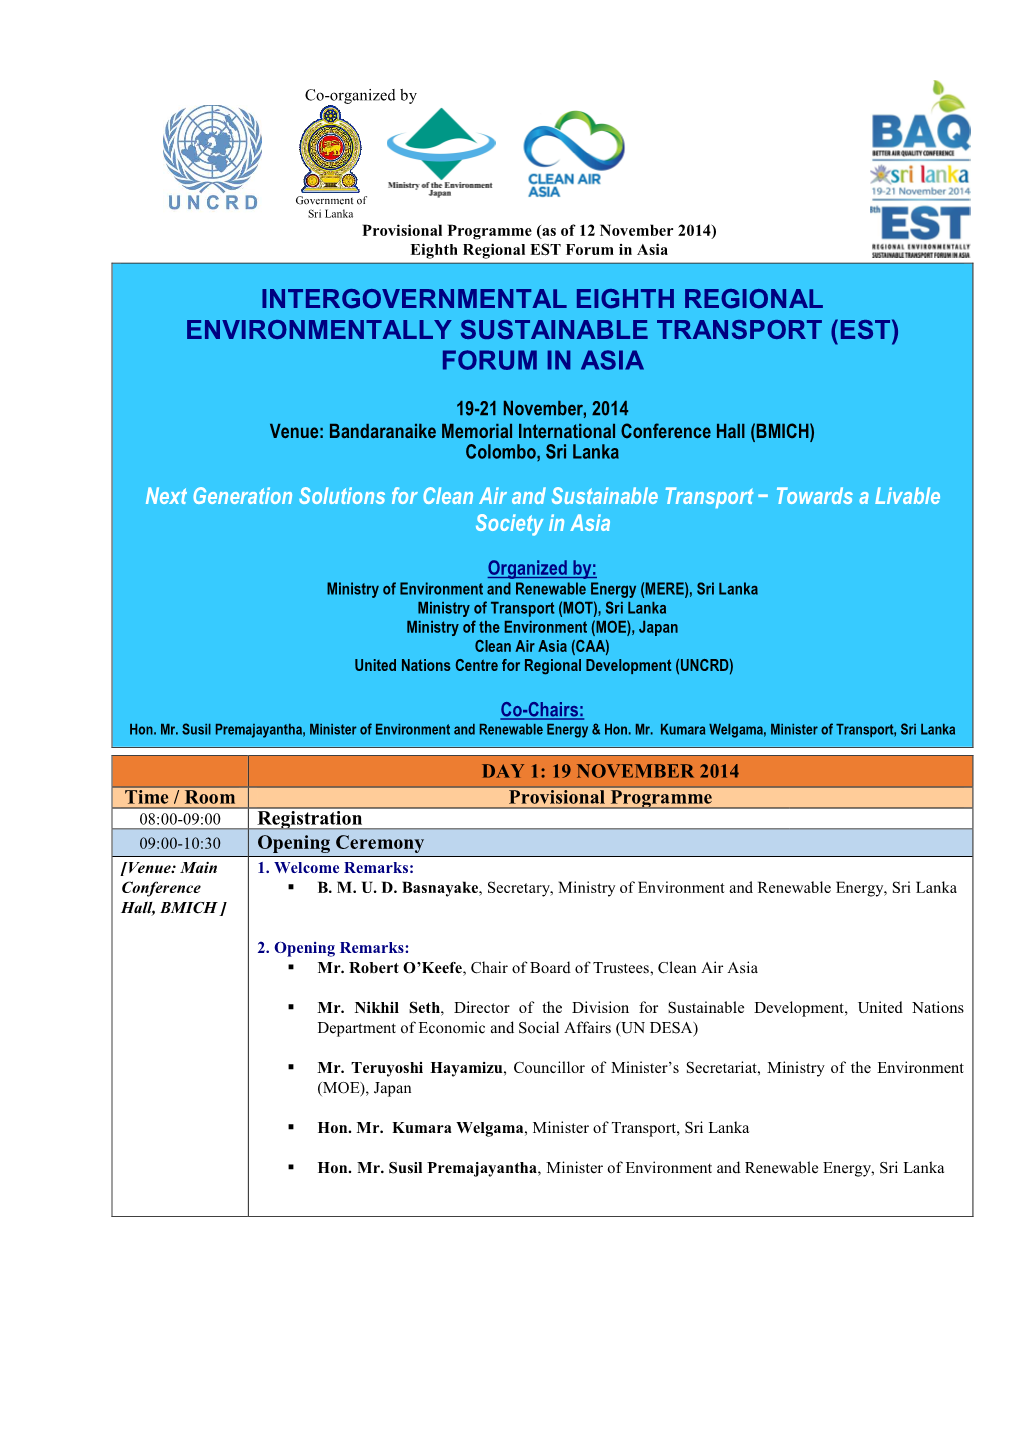 Intergovernmental Eighth Regional Environmentally Sustainable Transport (Est) Forum in Asia